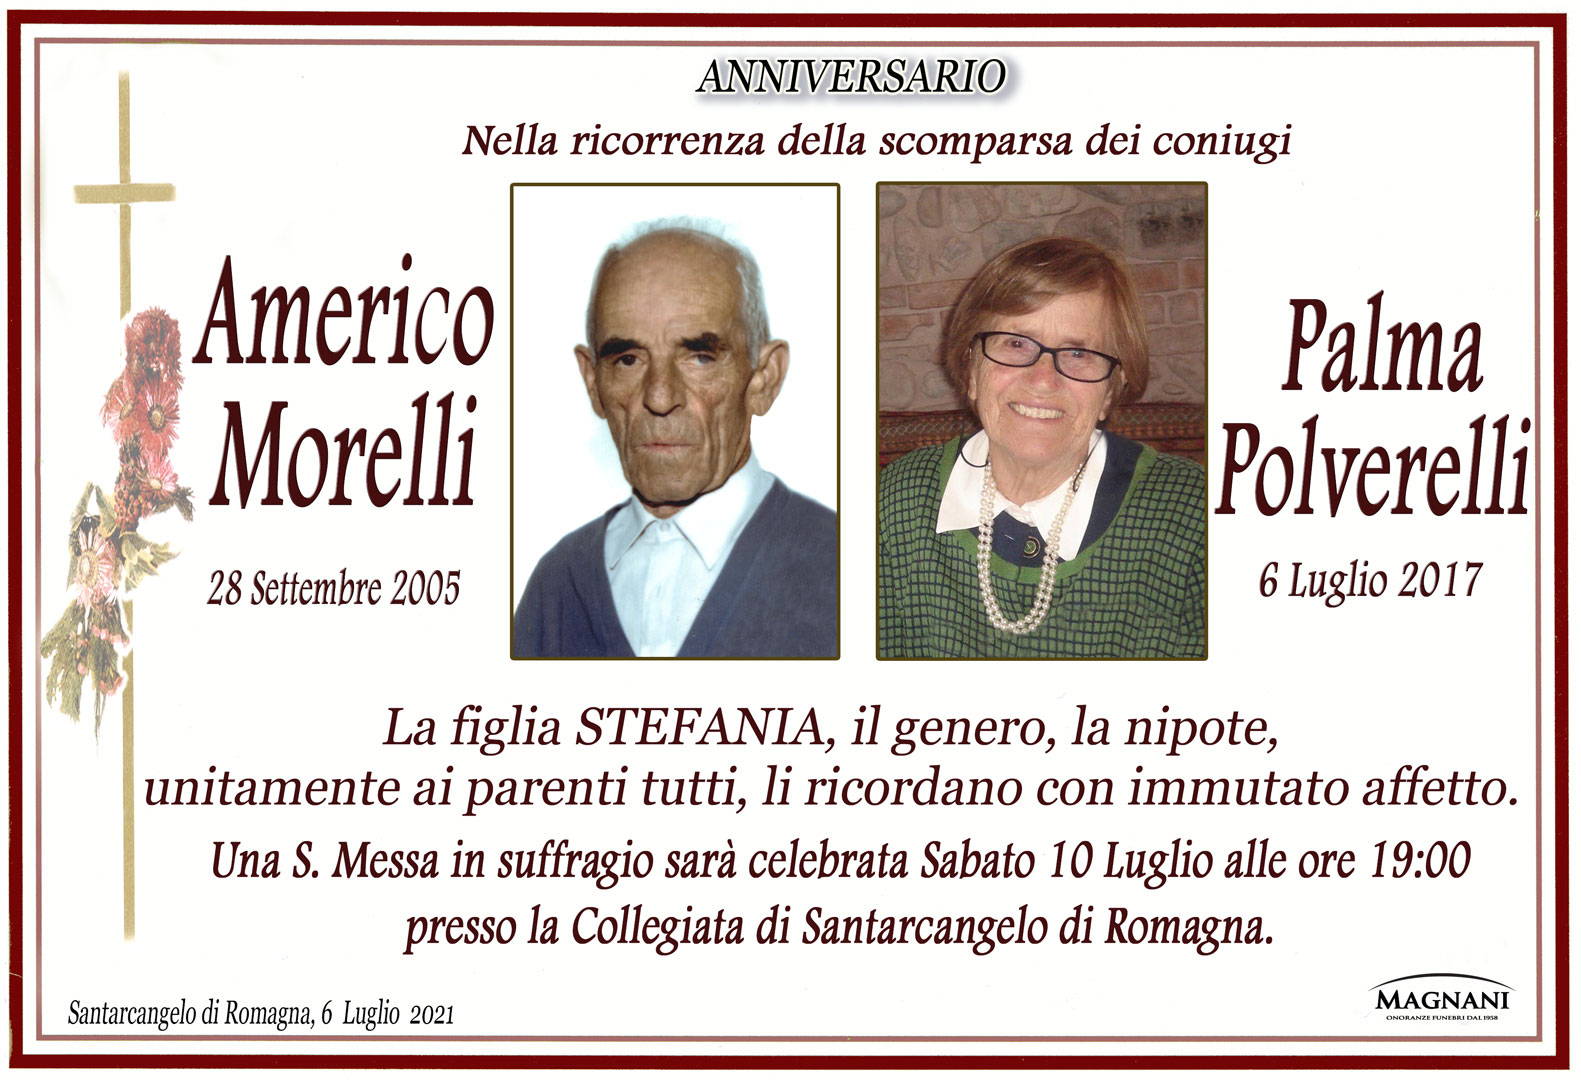 Americo Morelli e Palma Polverelli